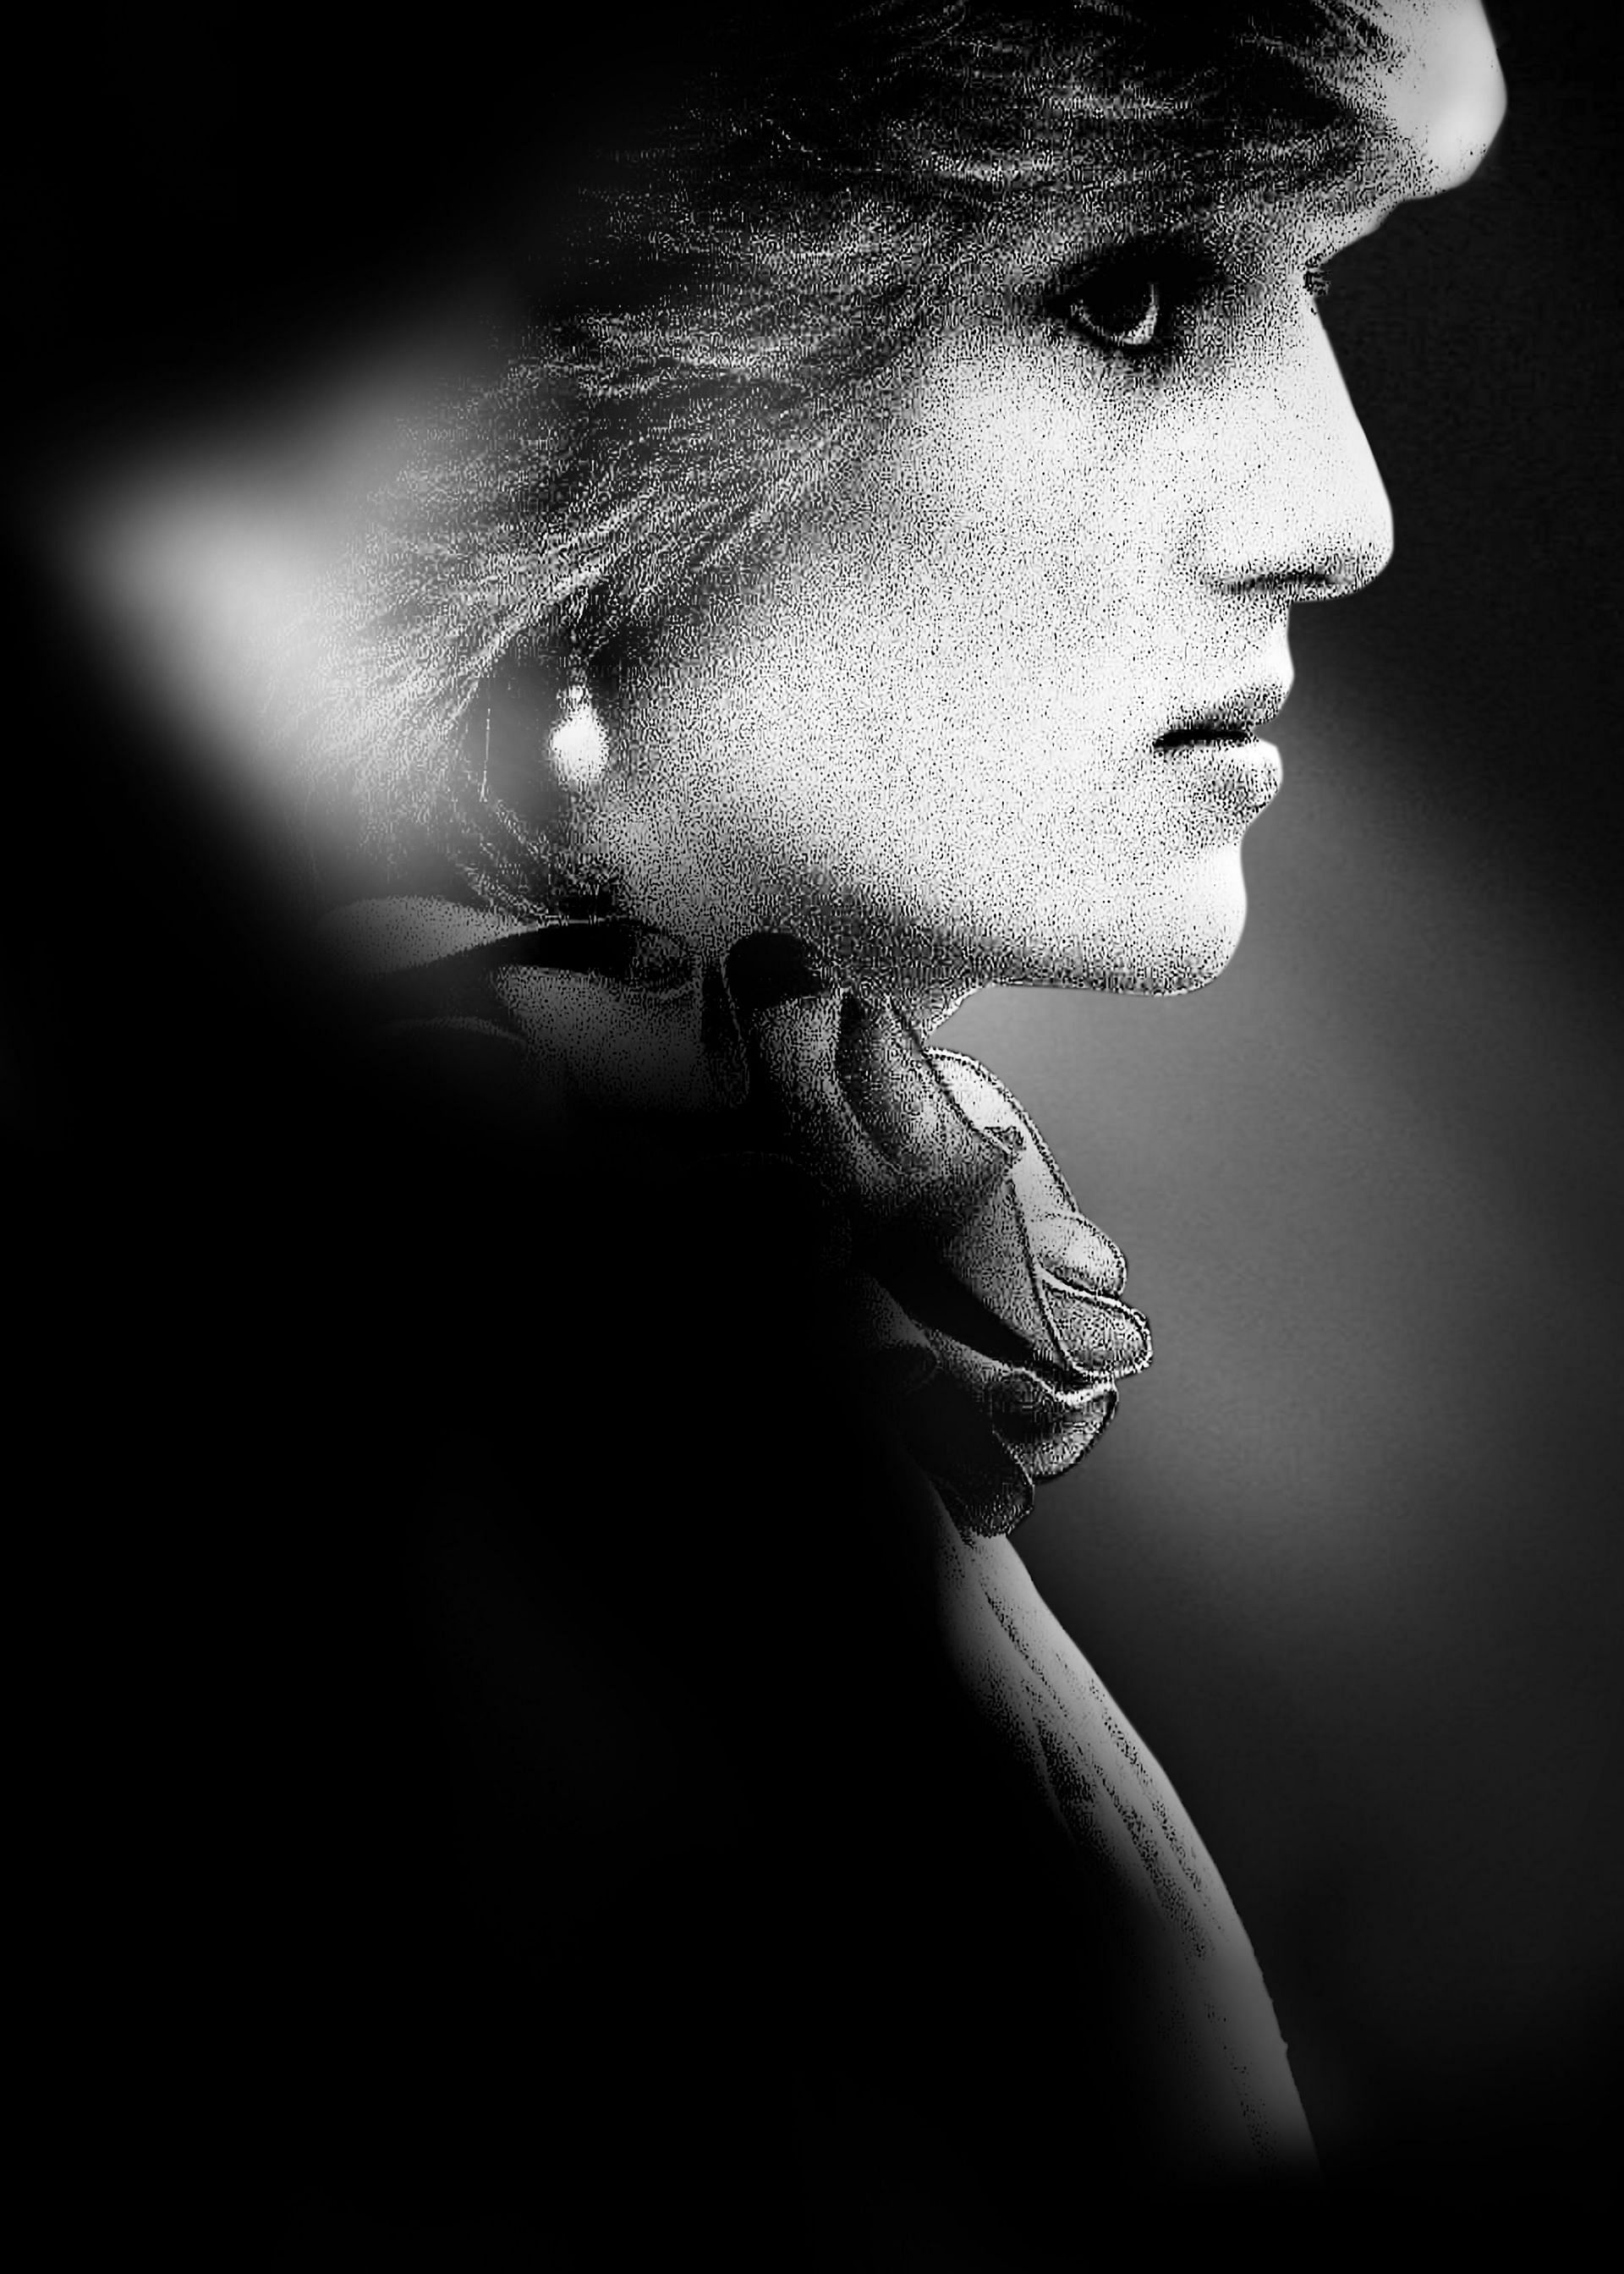 Princess Diana (image via HBO)